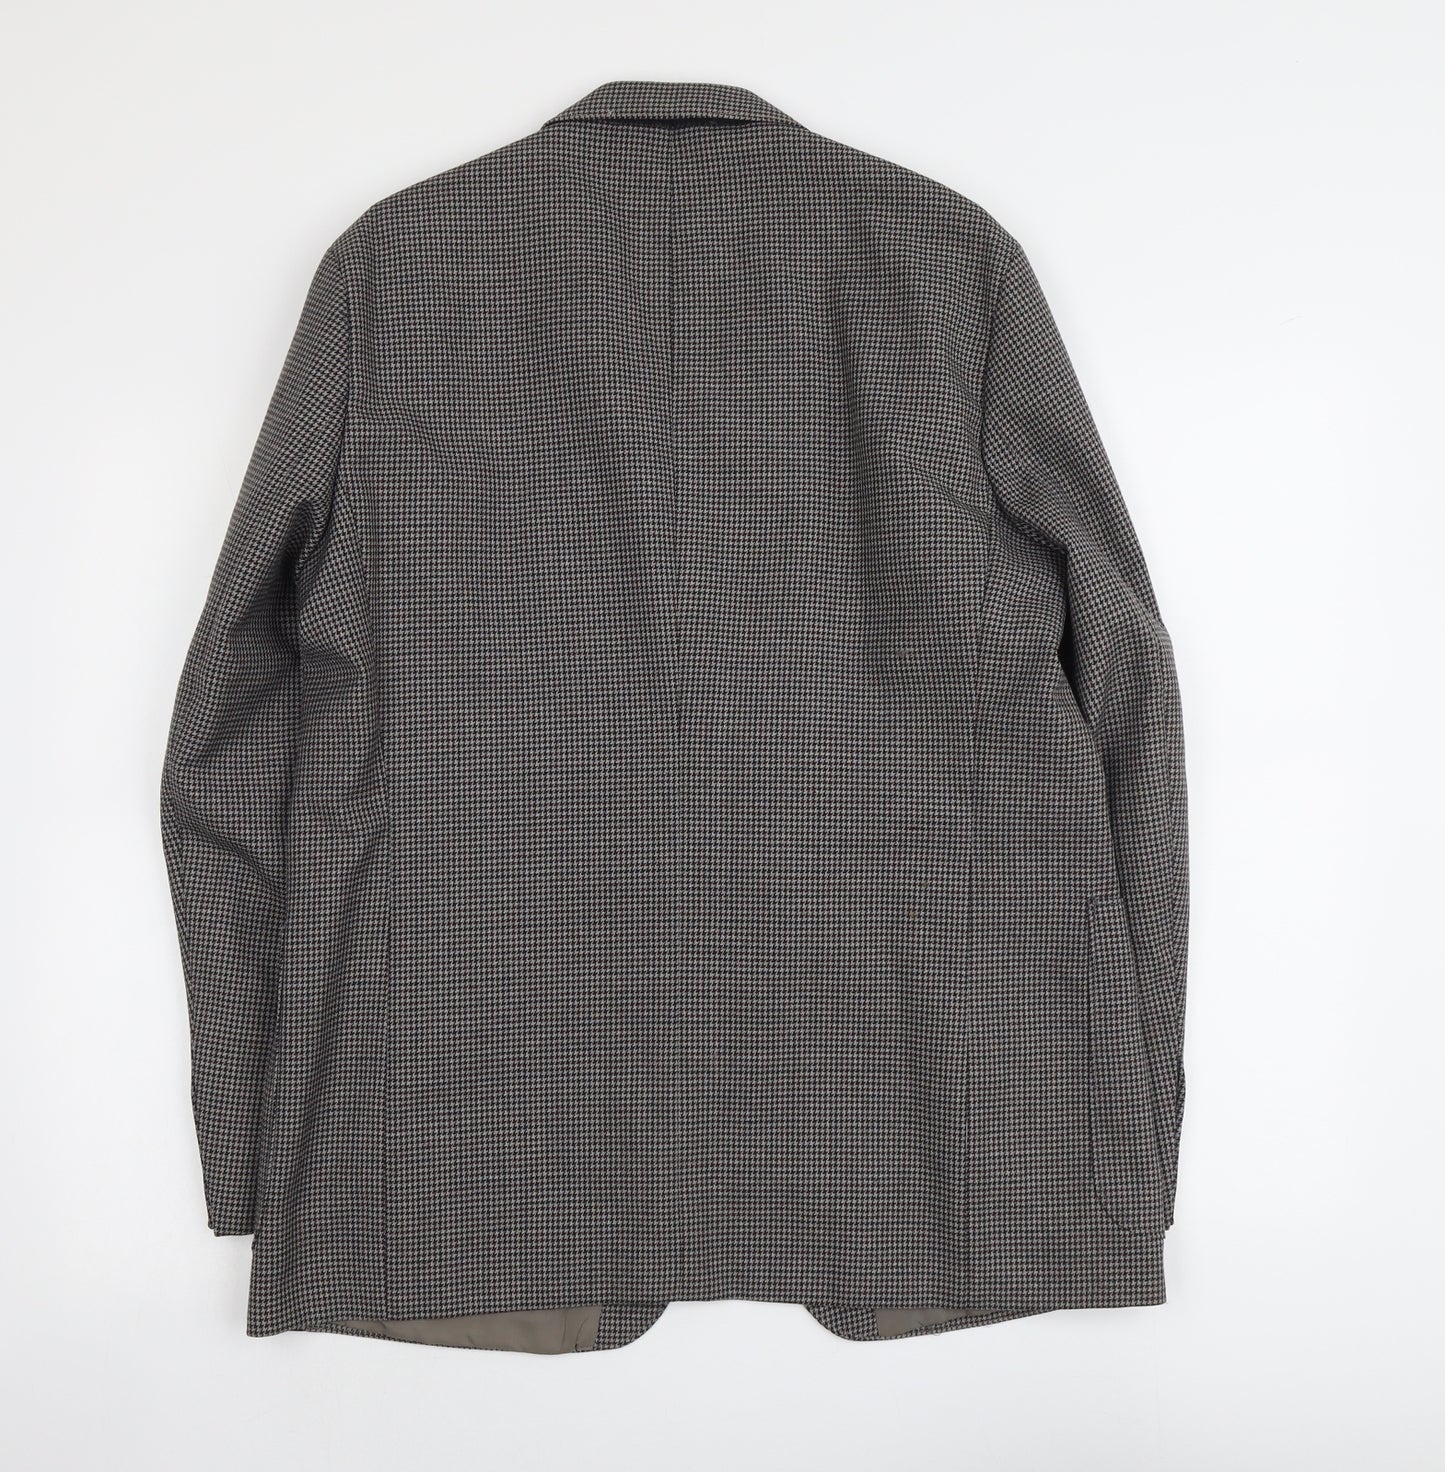 C&A Mens Grey Houndstooth Polyester Jacket Suit Jacket Size M Regular